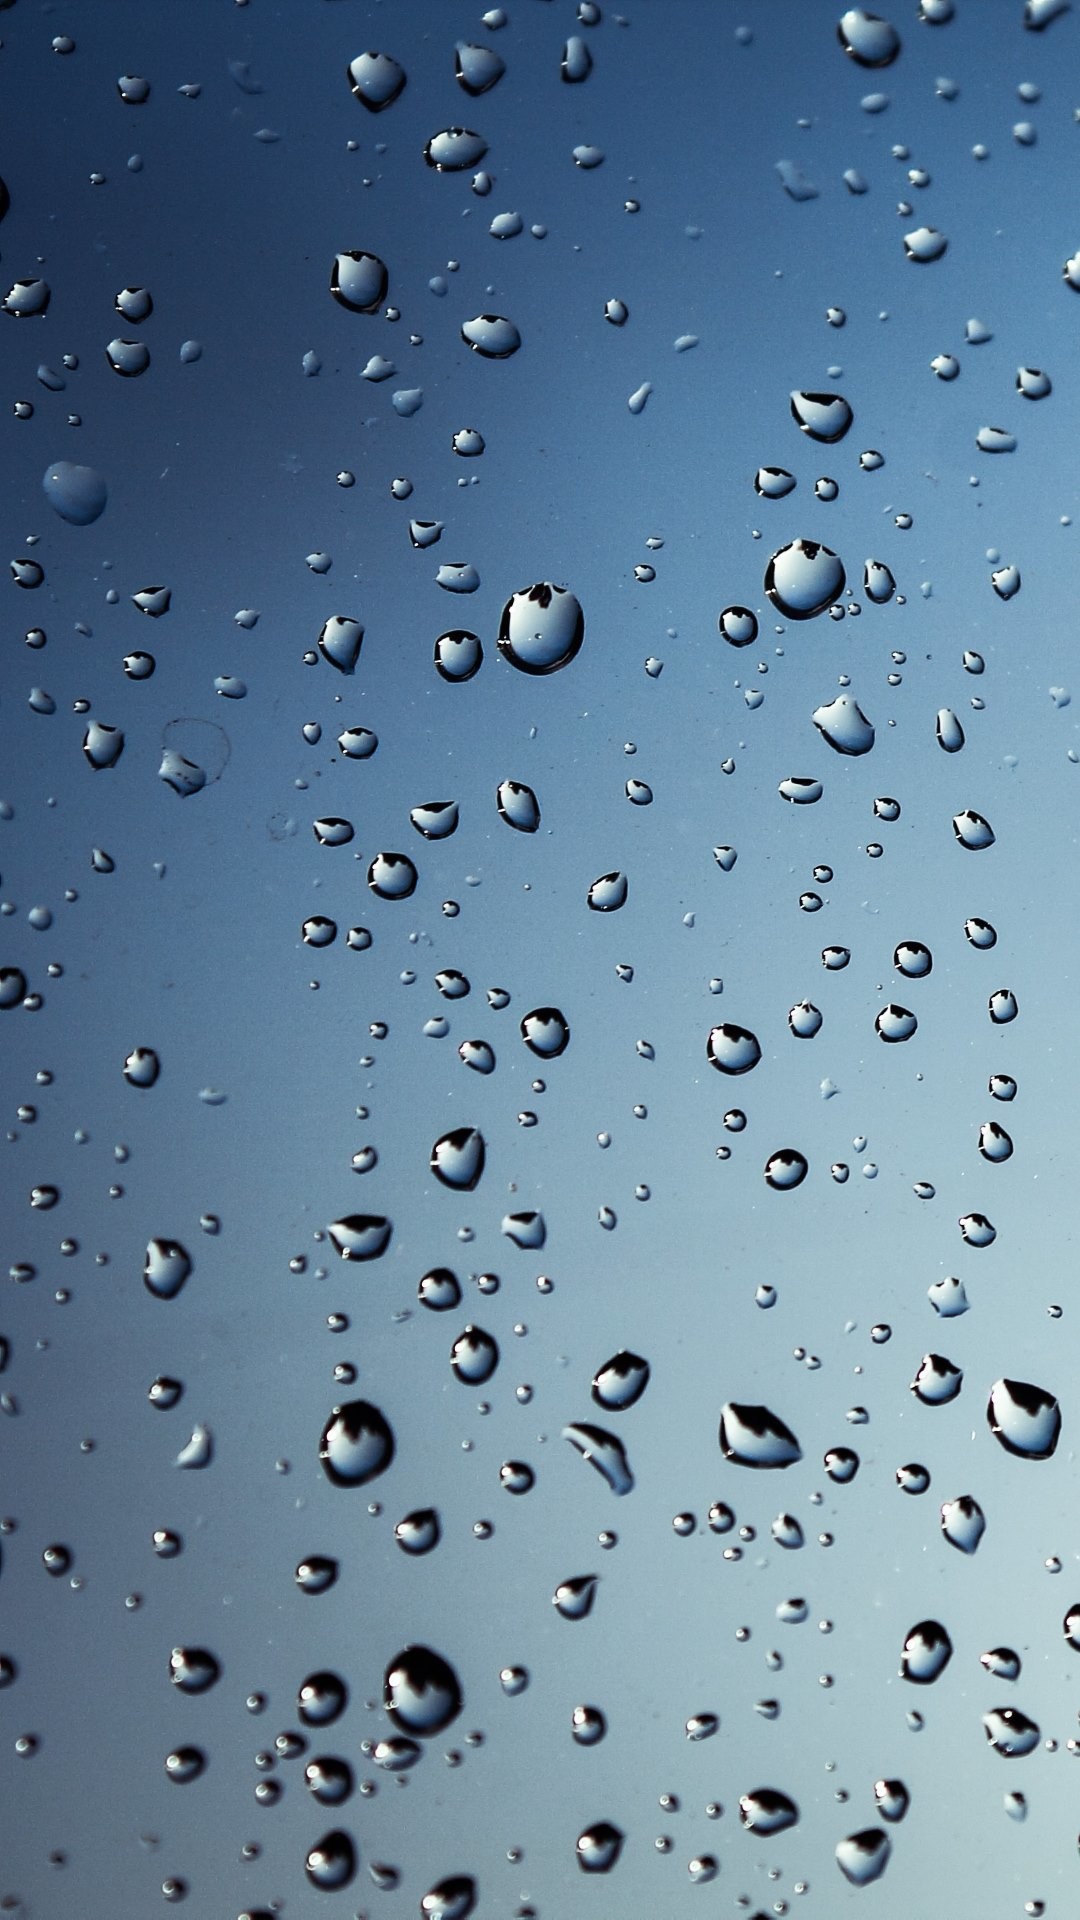 1080x1920 4K HD Wallpaper: Rain Drops on Window